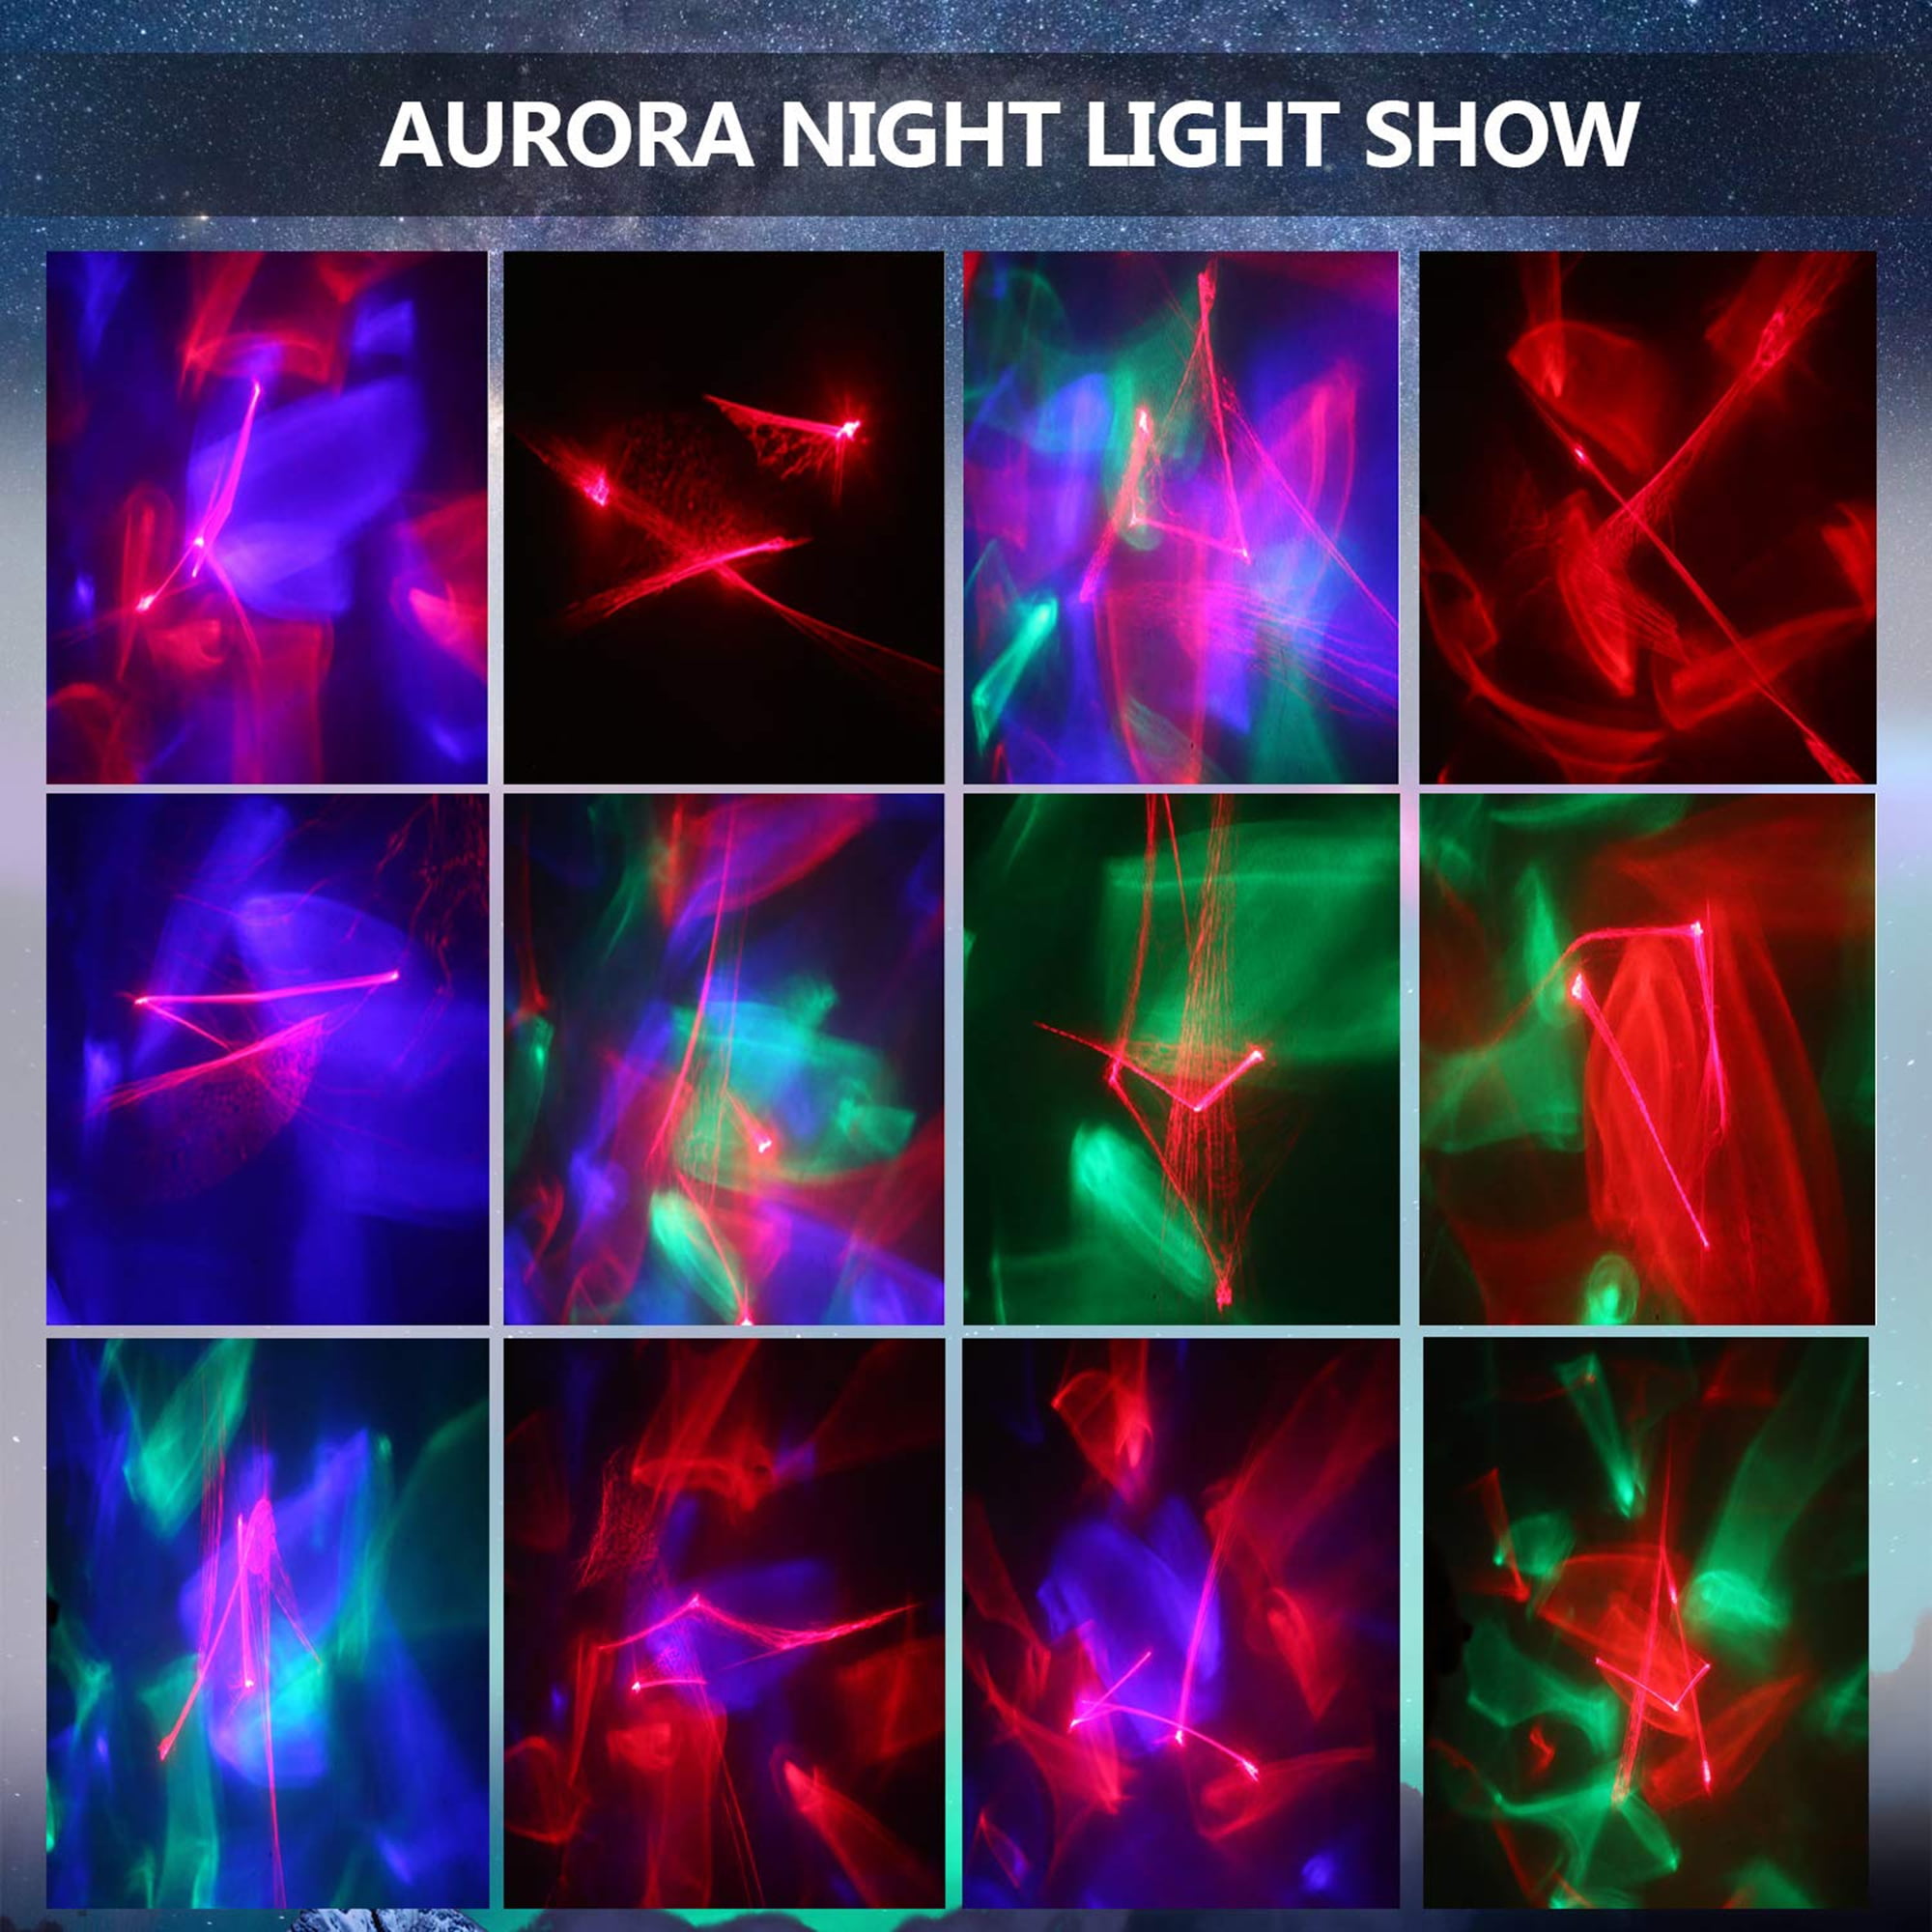 Details about   Furtherlux 1-5 Meter RGB LED Aurora Strip Lights Aurora Projector Night Light